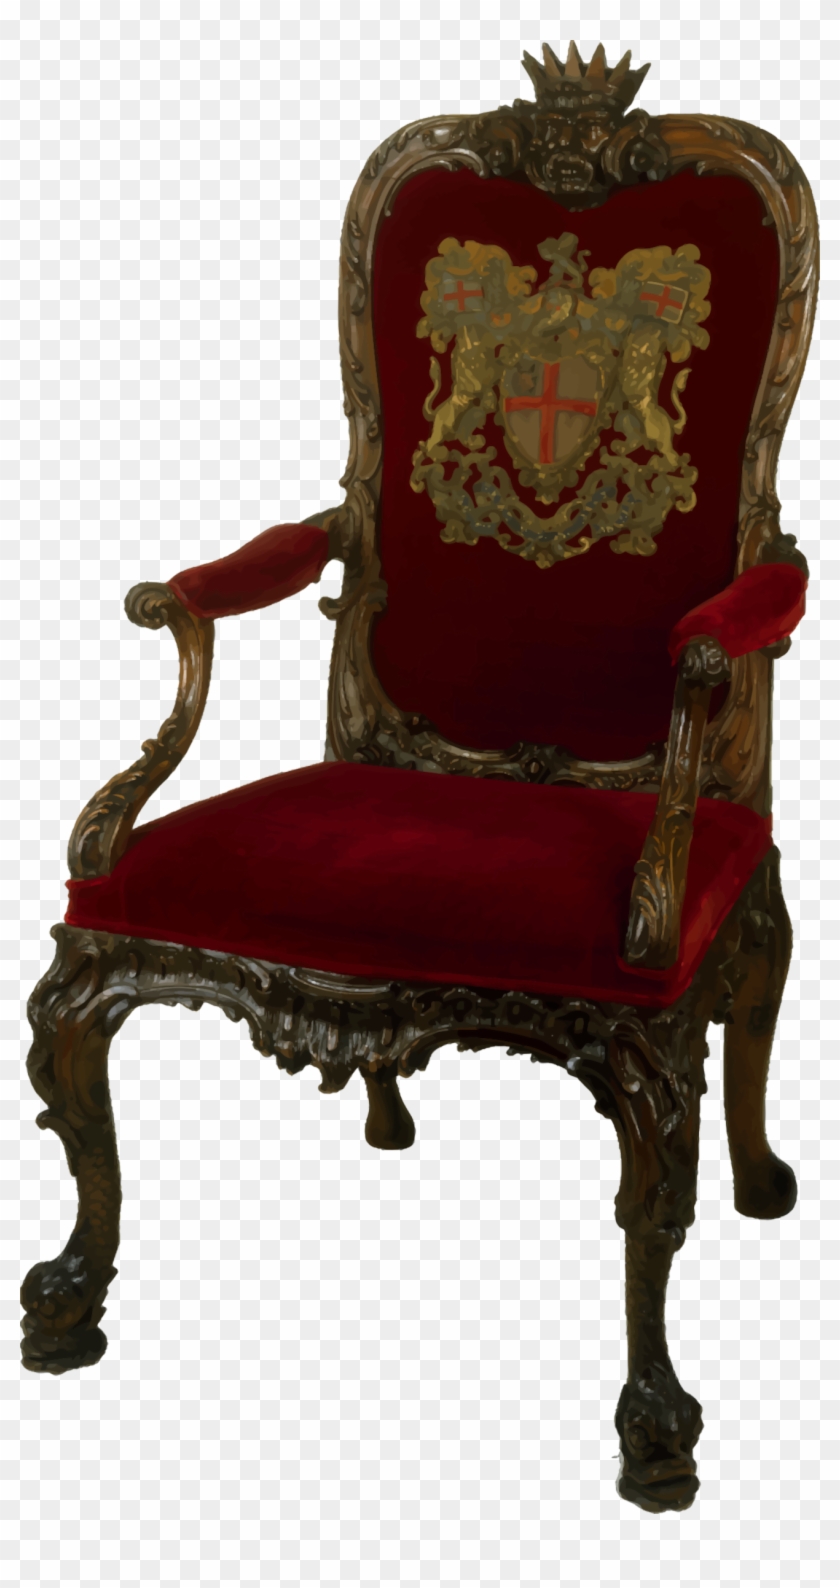 Big Image - Ornate Chair #702939